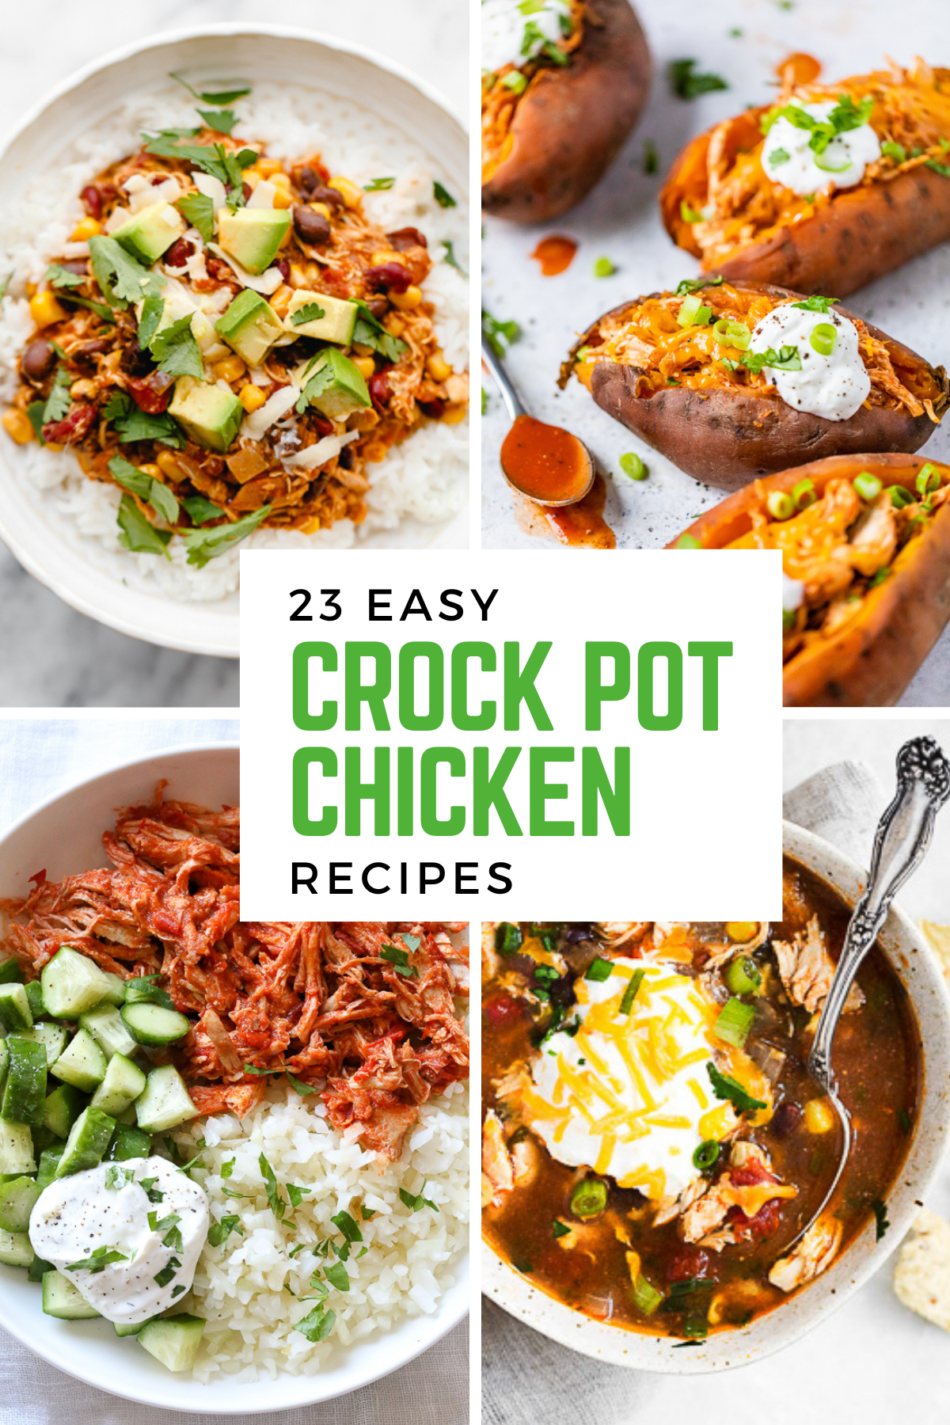 23 Easy Crock Pot Chicken Recipes – Healthy Slow Cooker Recipes!